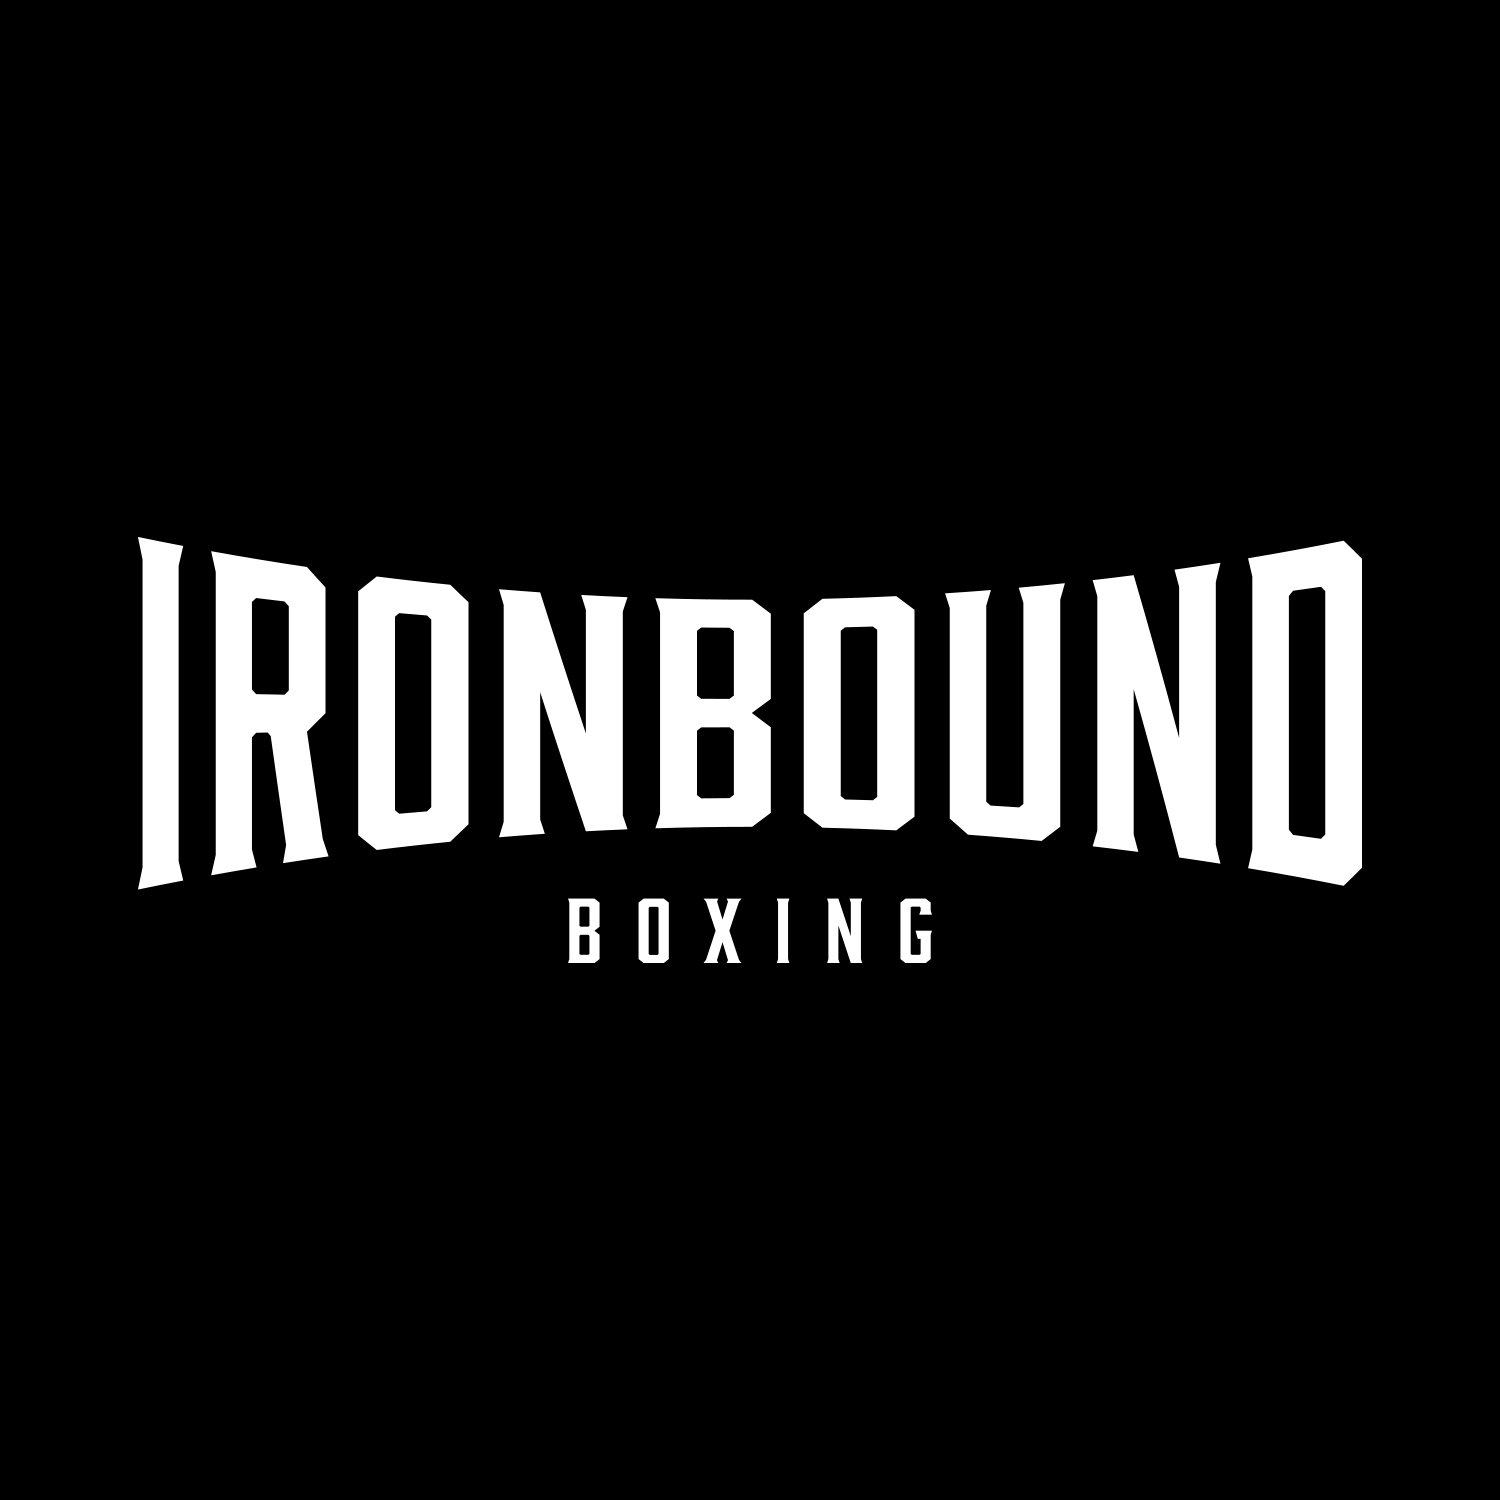 Ironbound Boxing